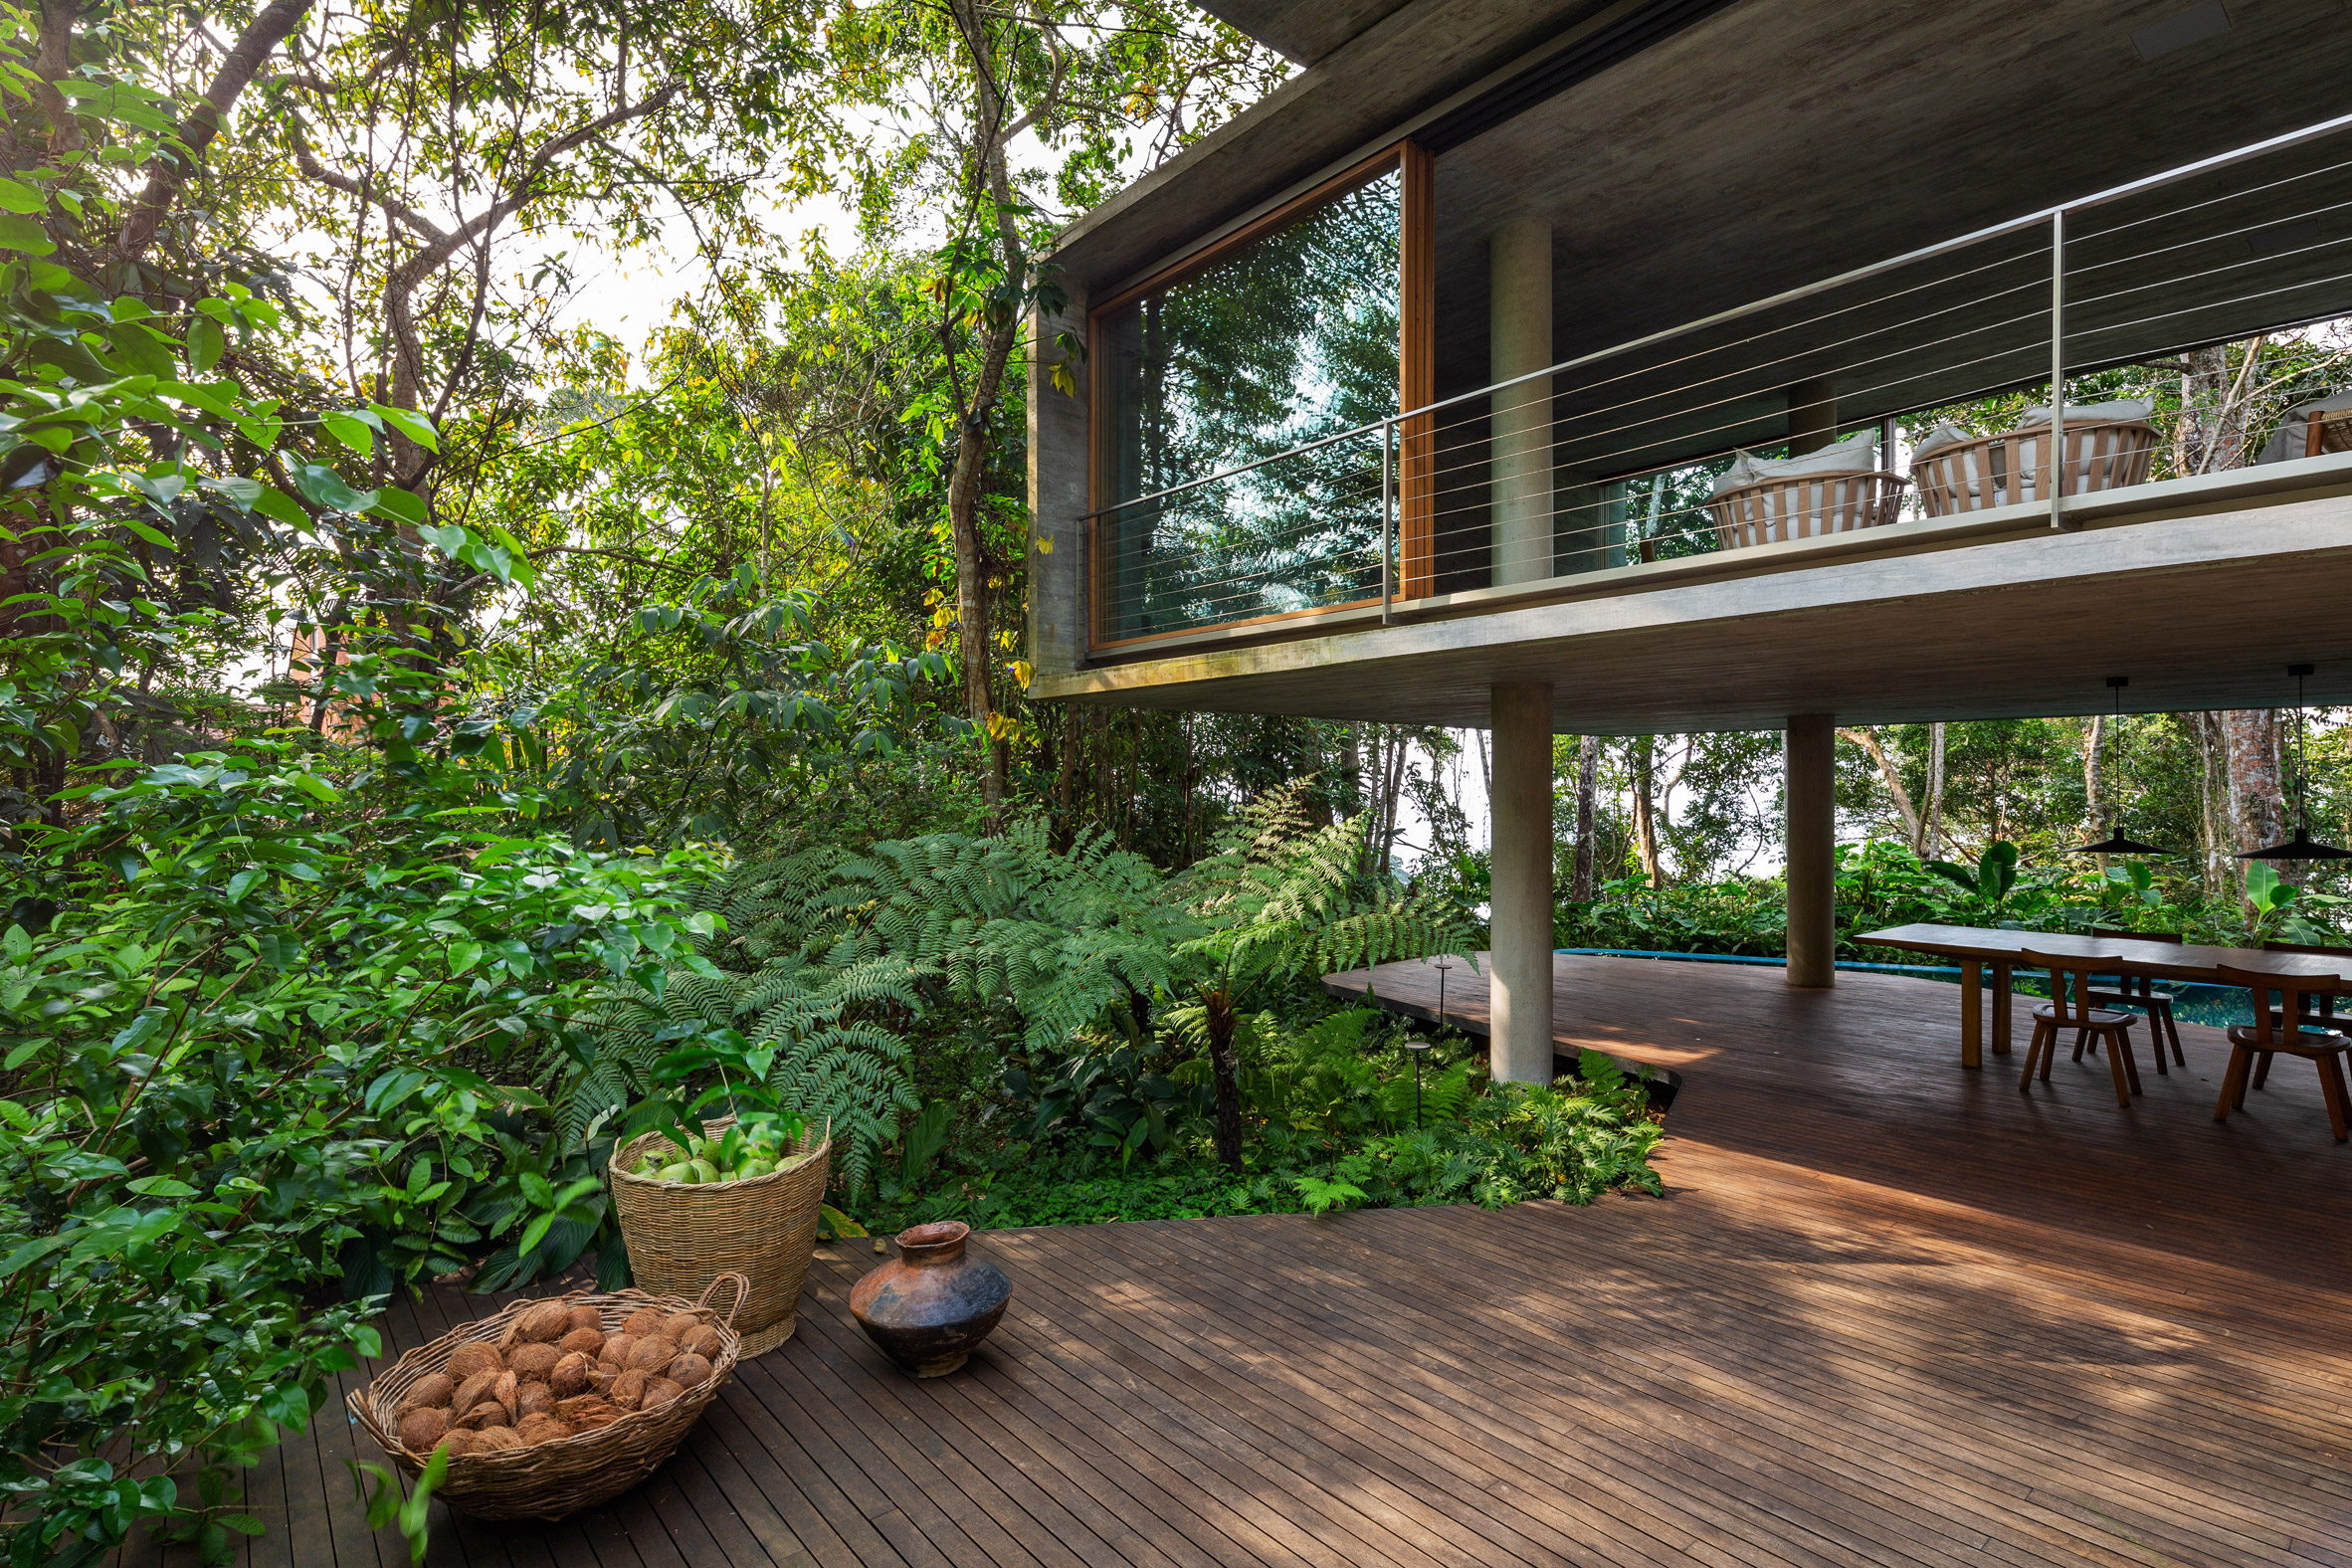 Wooden decking over rainforest floor with Casa Azul raised on concrete pilotis